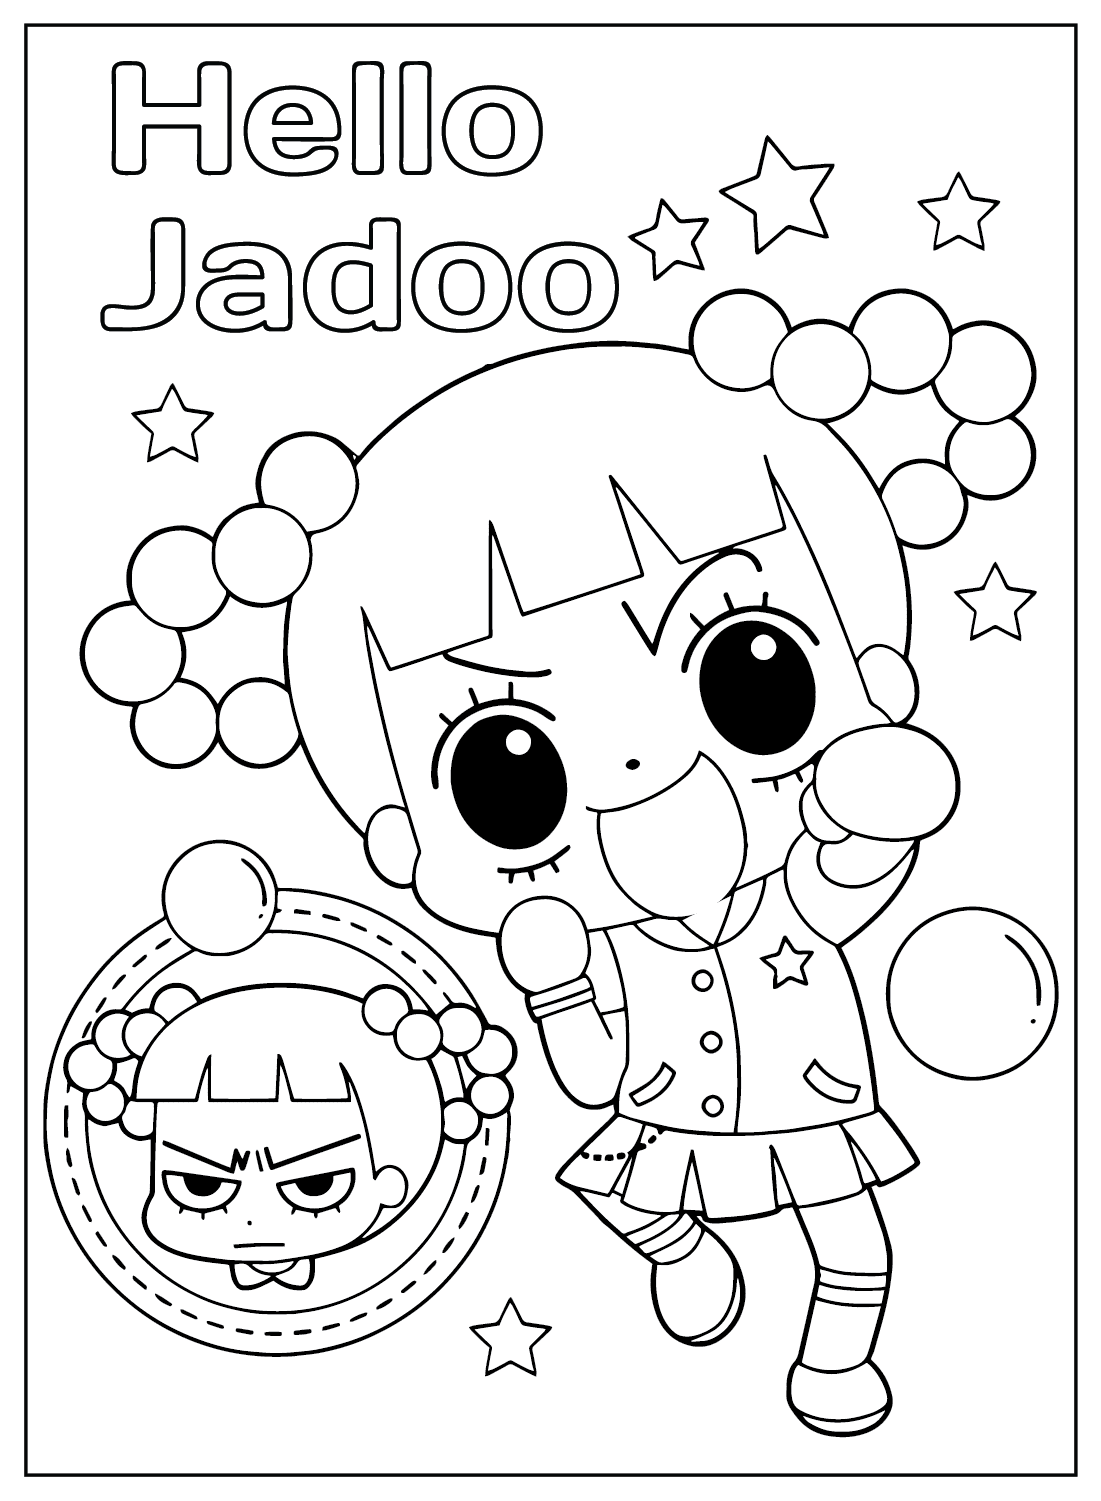 Бесплатная раскраска Hello Jadoo от Hello Jadoo